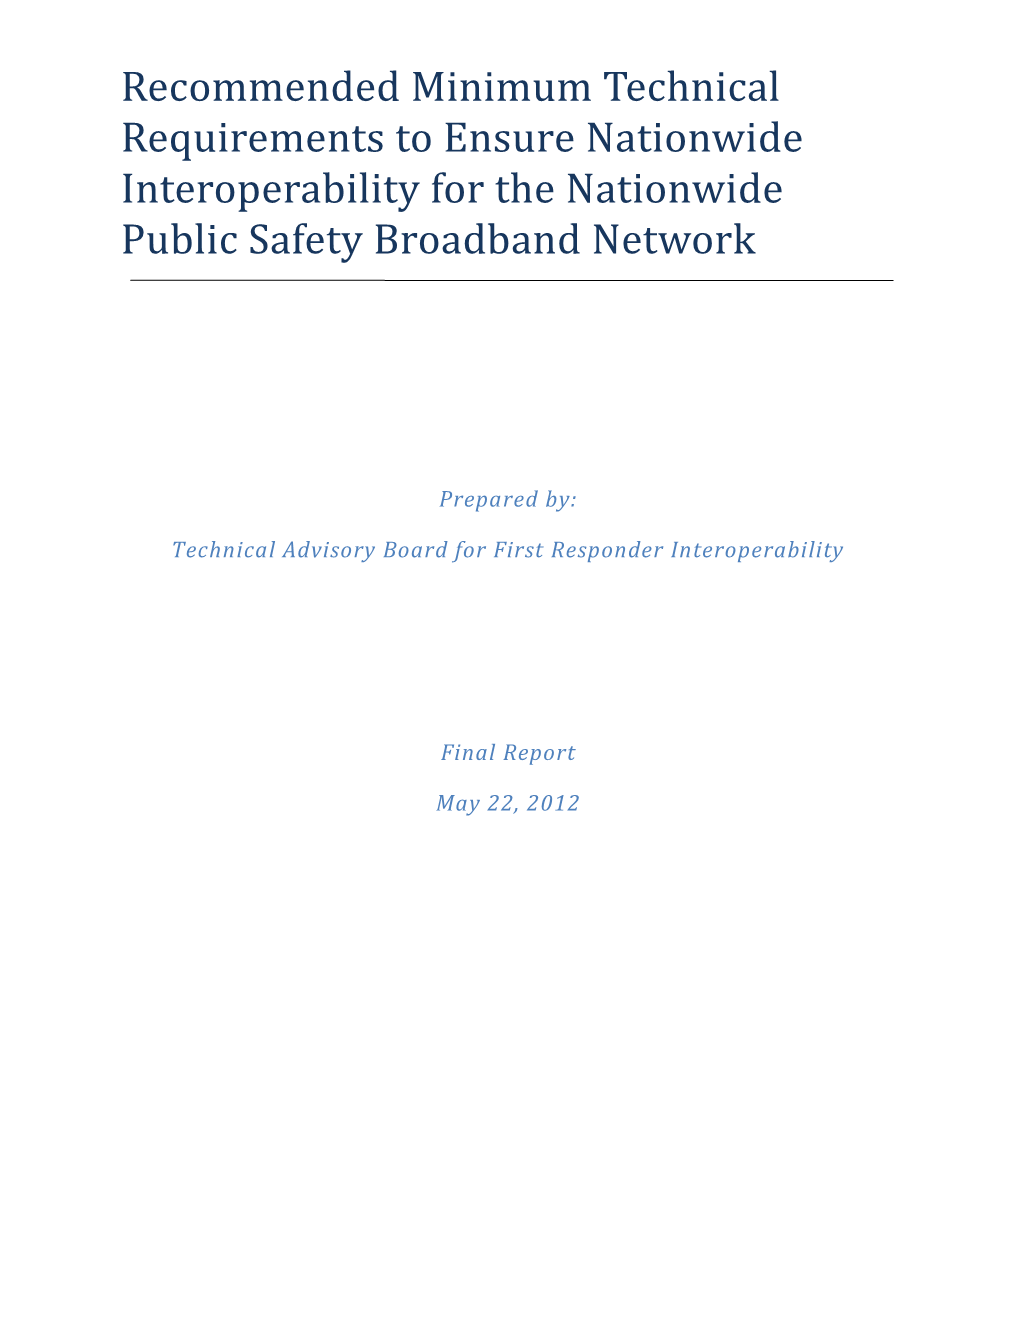 Technical Advisory Board for First Responder Interoperability